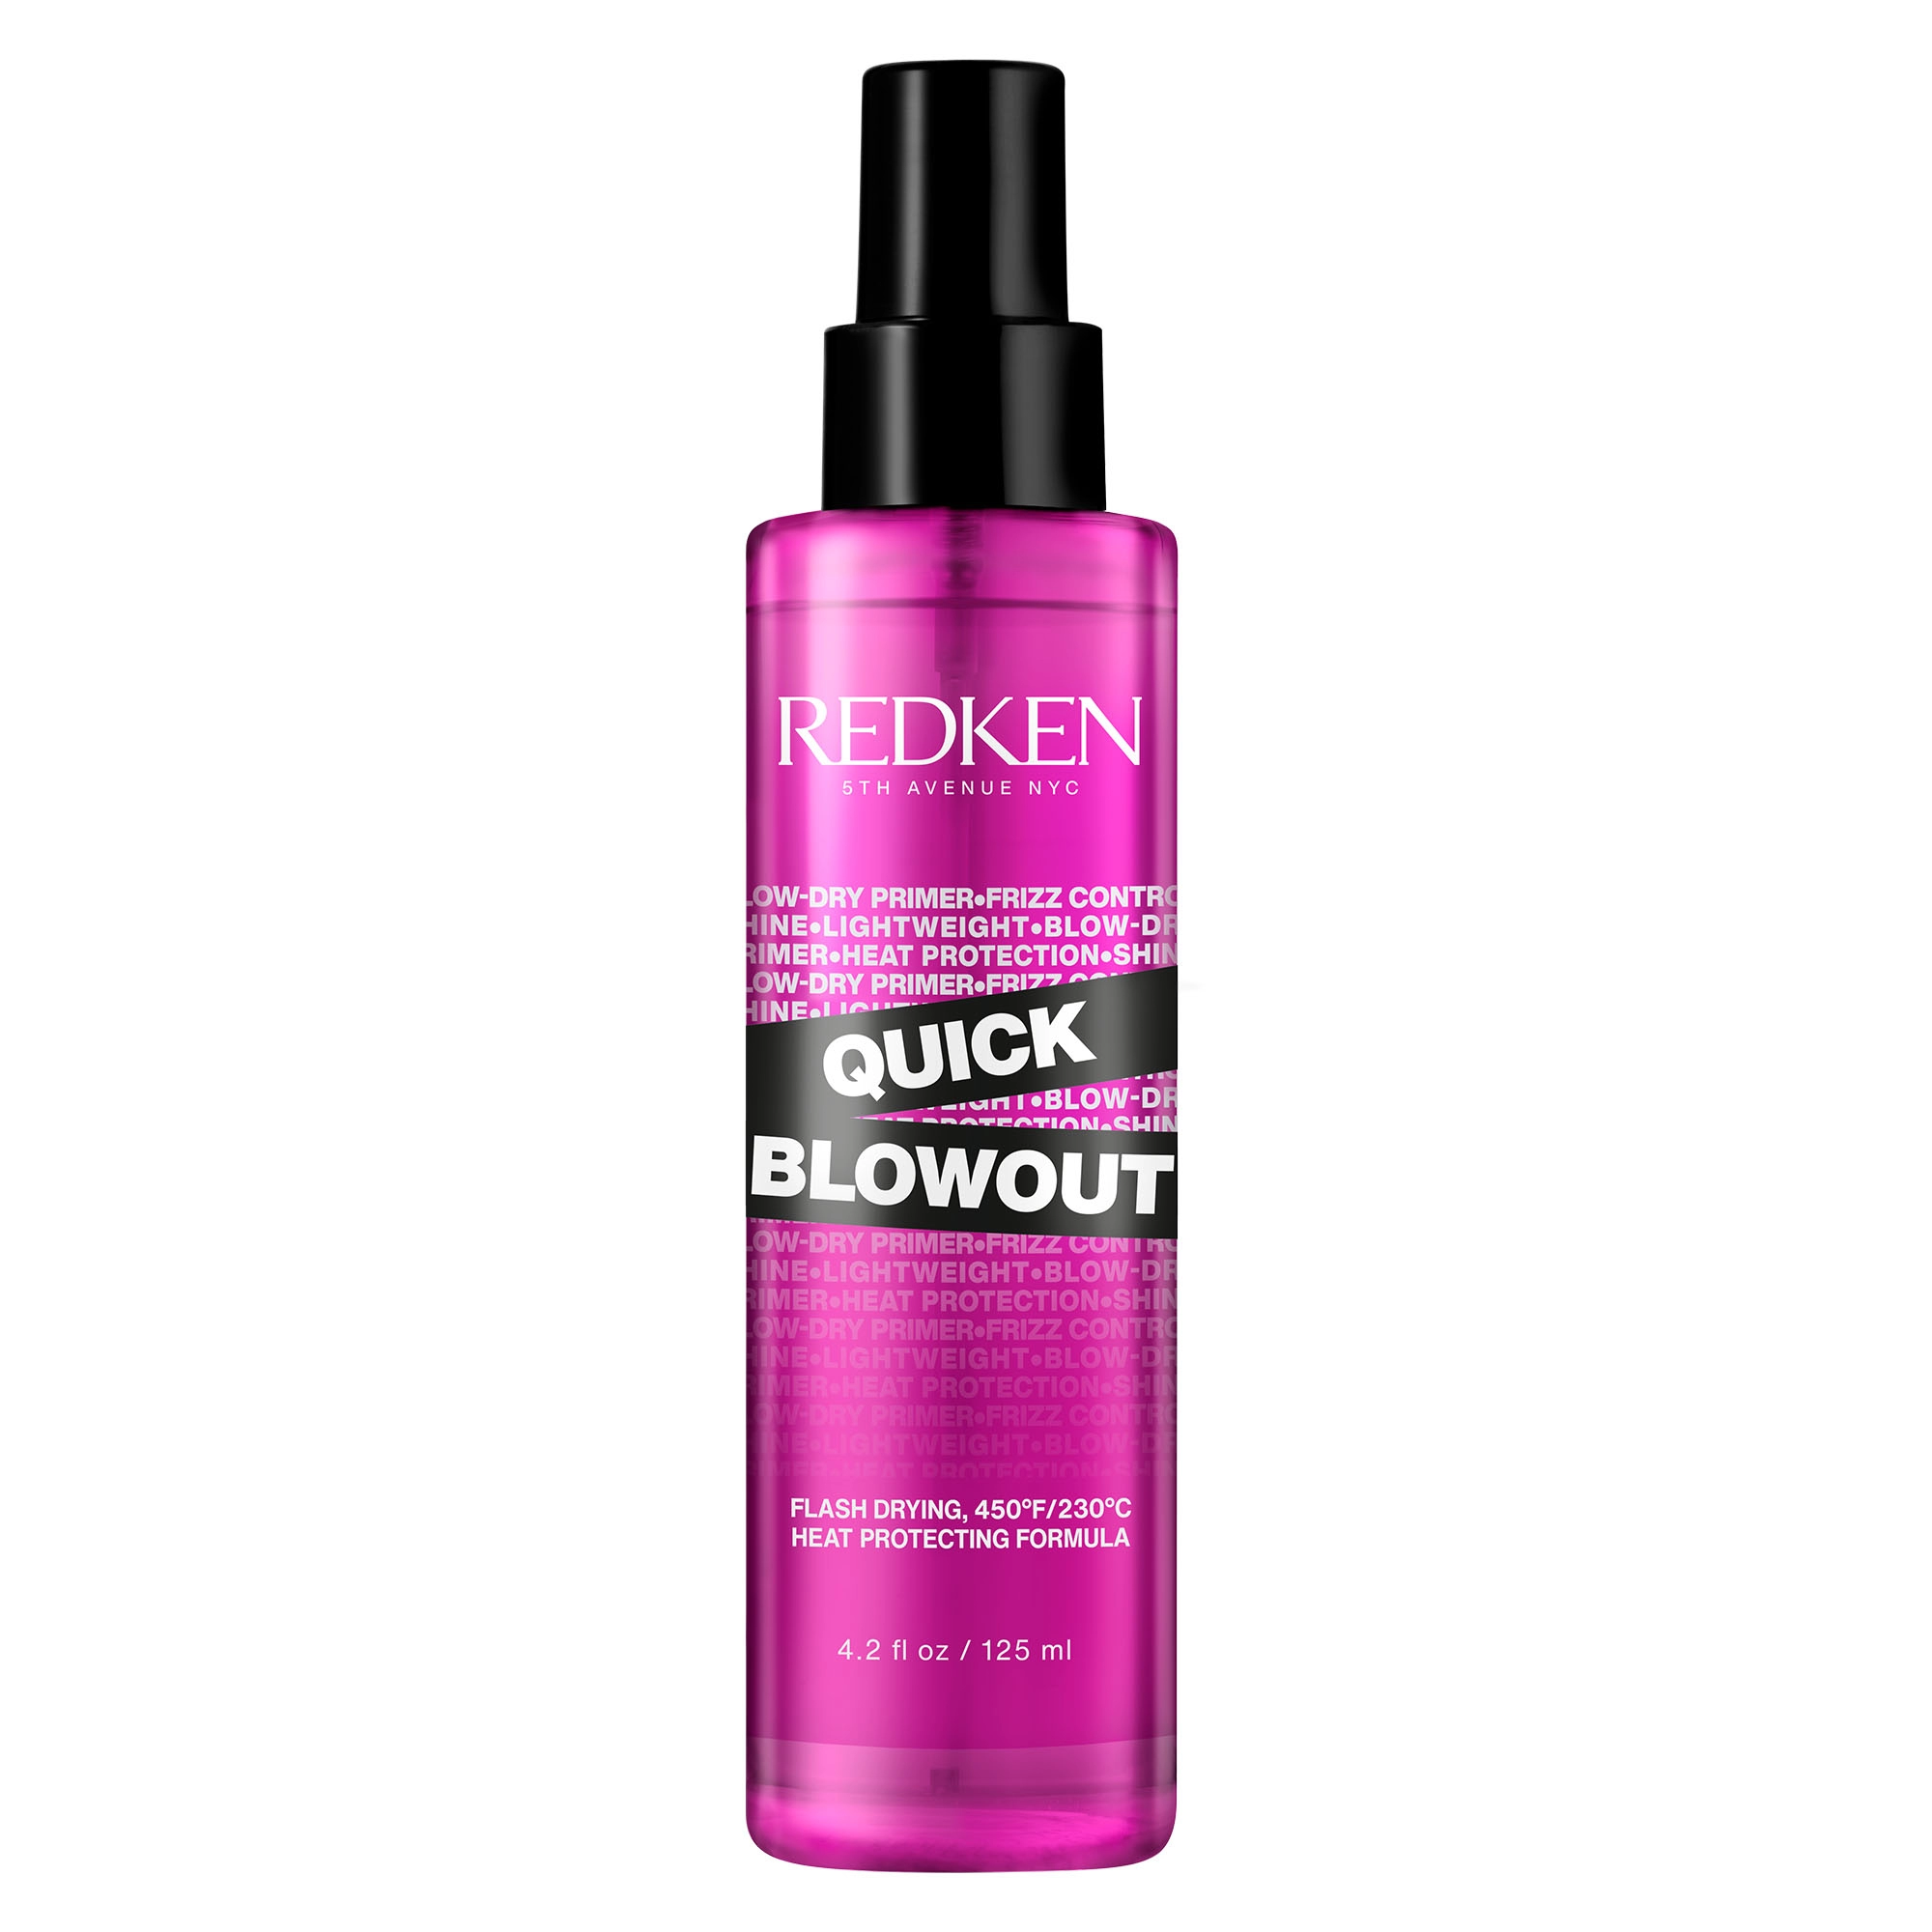 Redken-2021-Quick-BlowOut-Pack-2000×2000